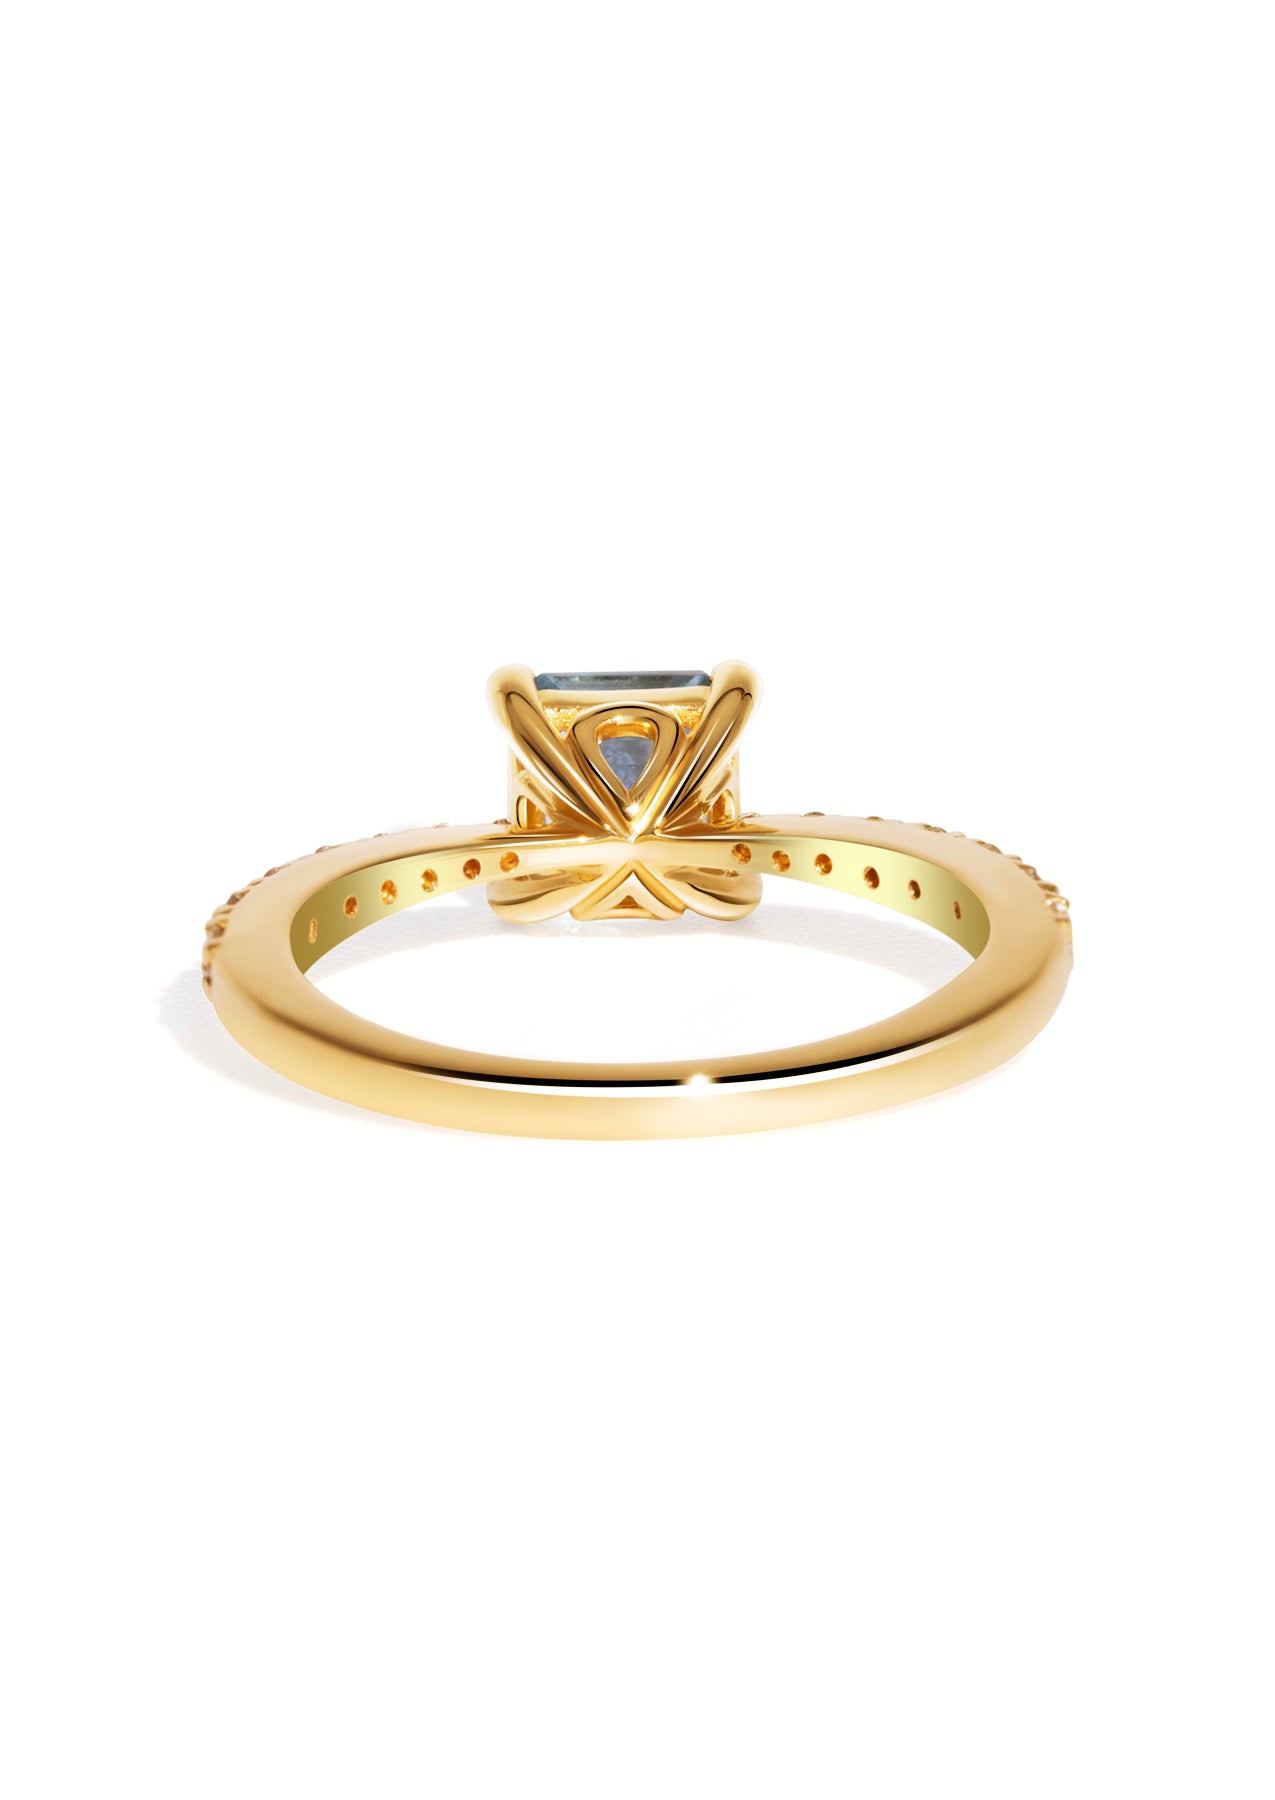 The Celine Ring with 0.85ct Emerald Aquamarine